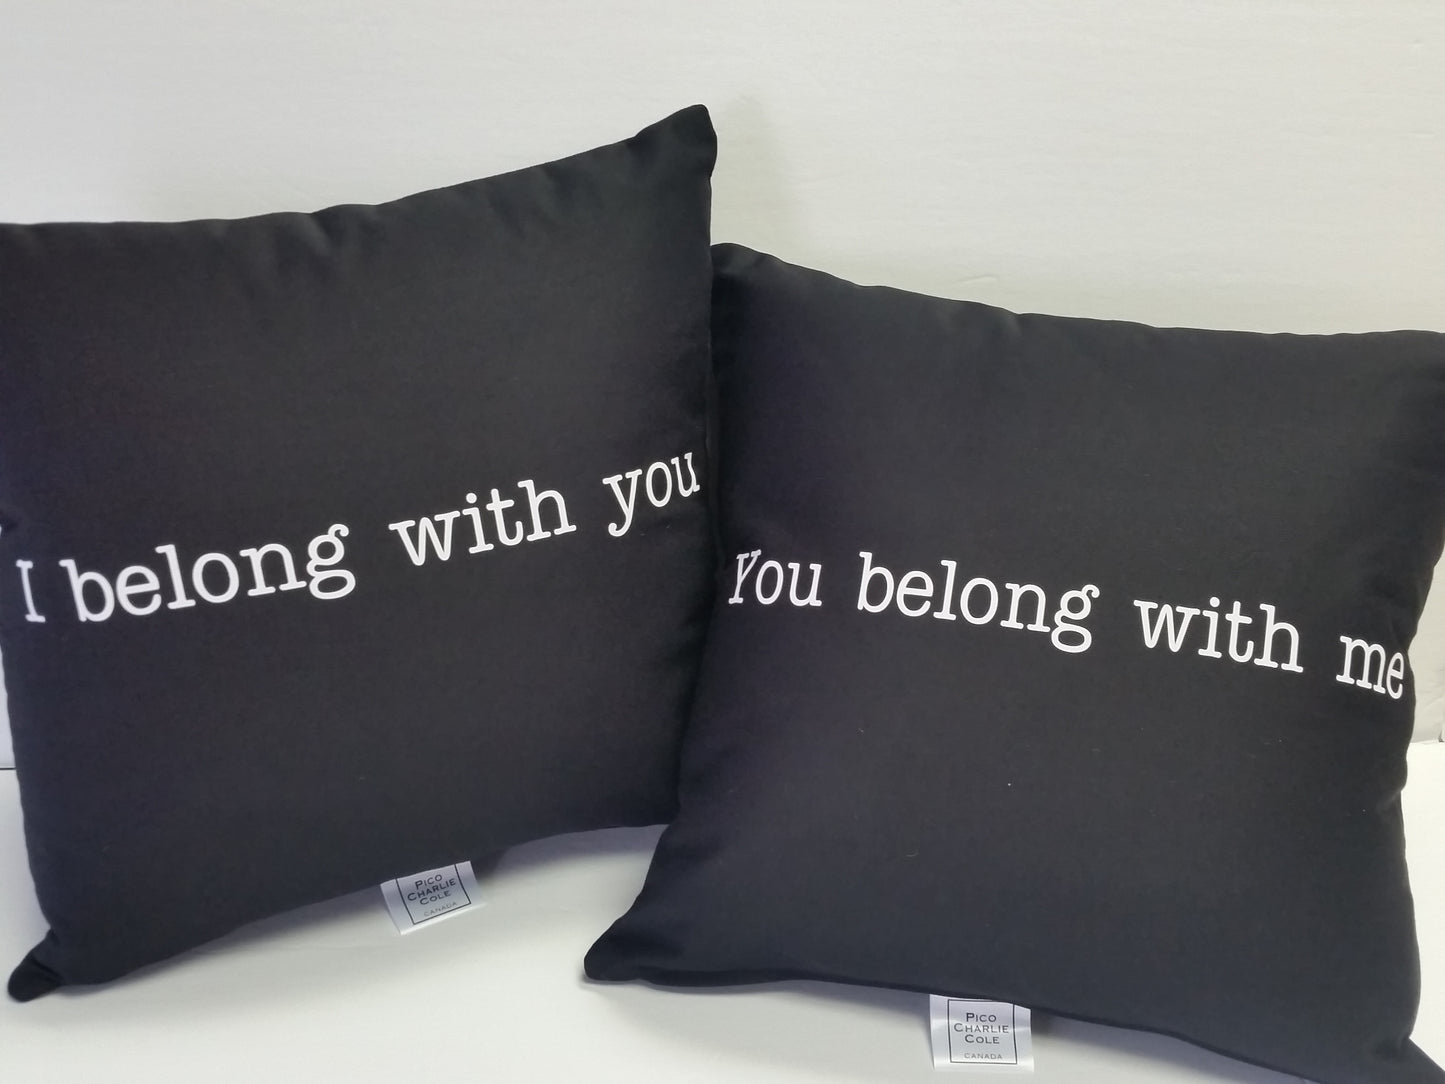 I belong with you Cotton Pillow